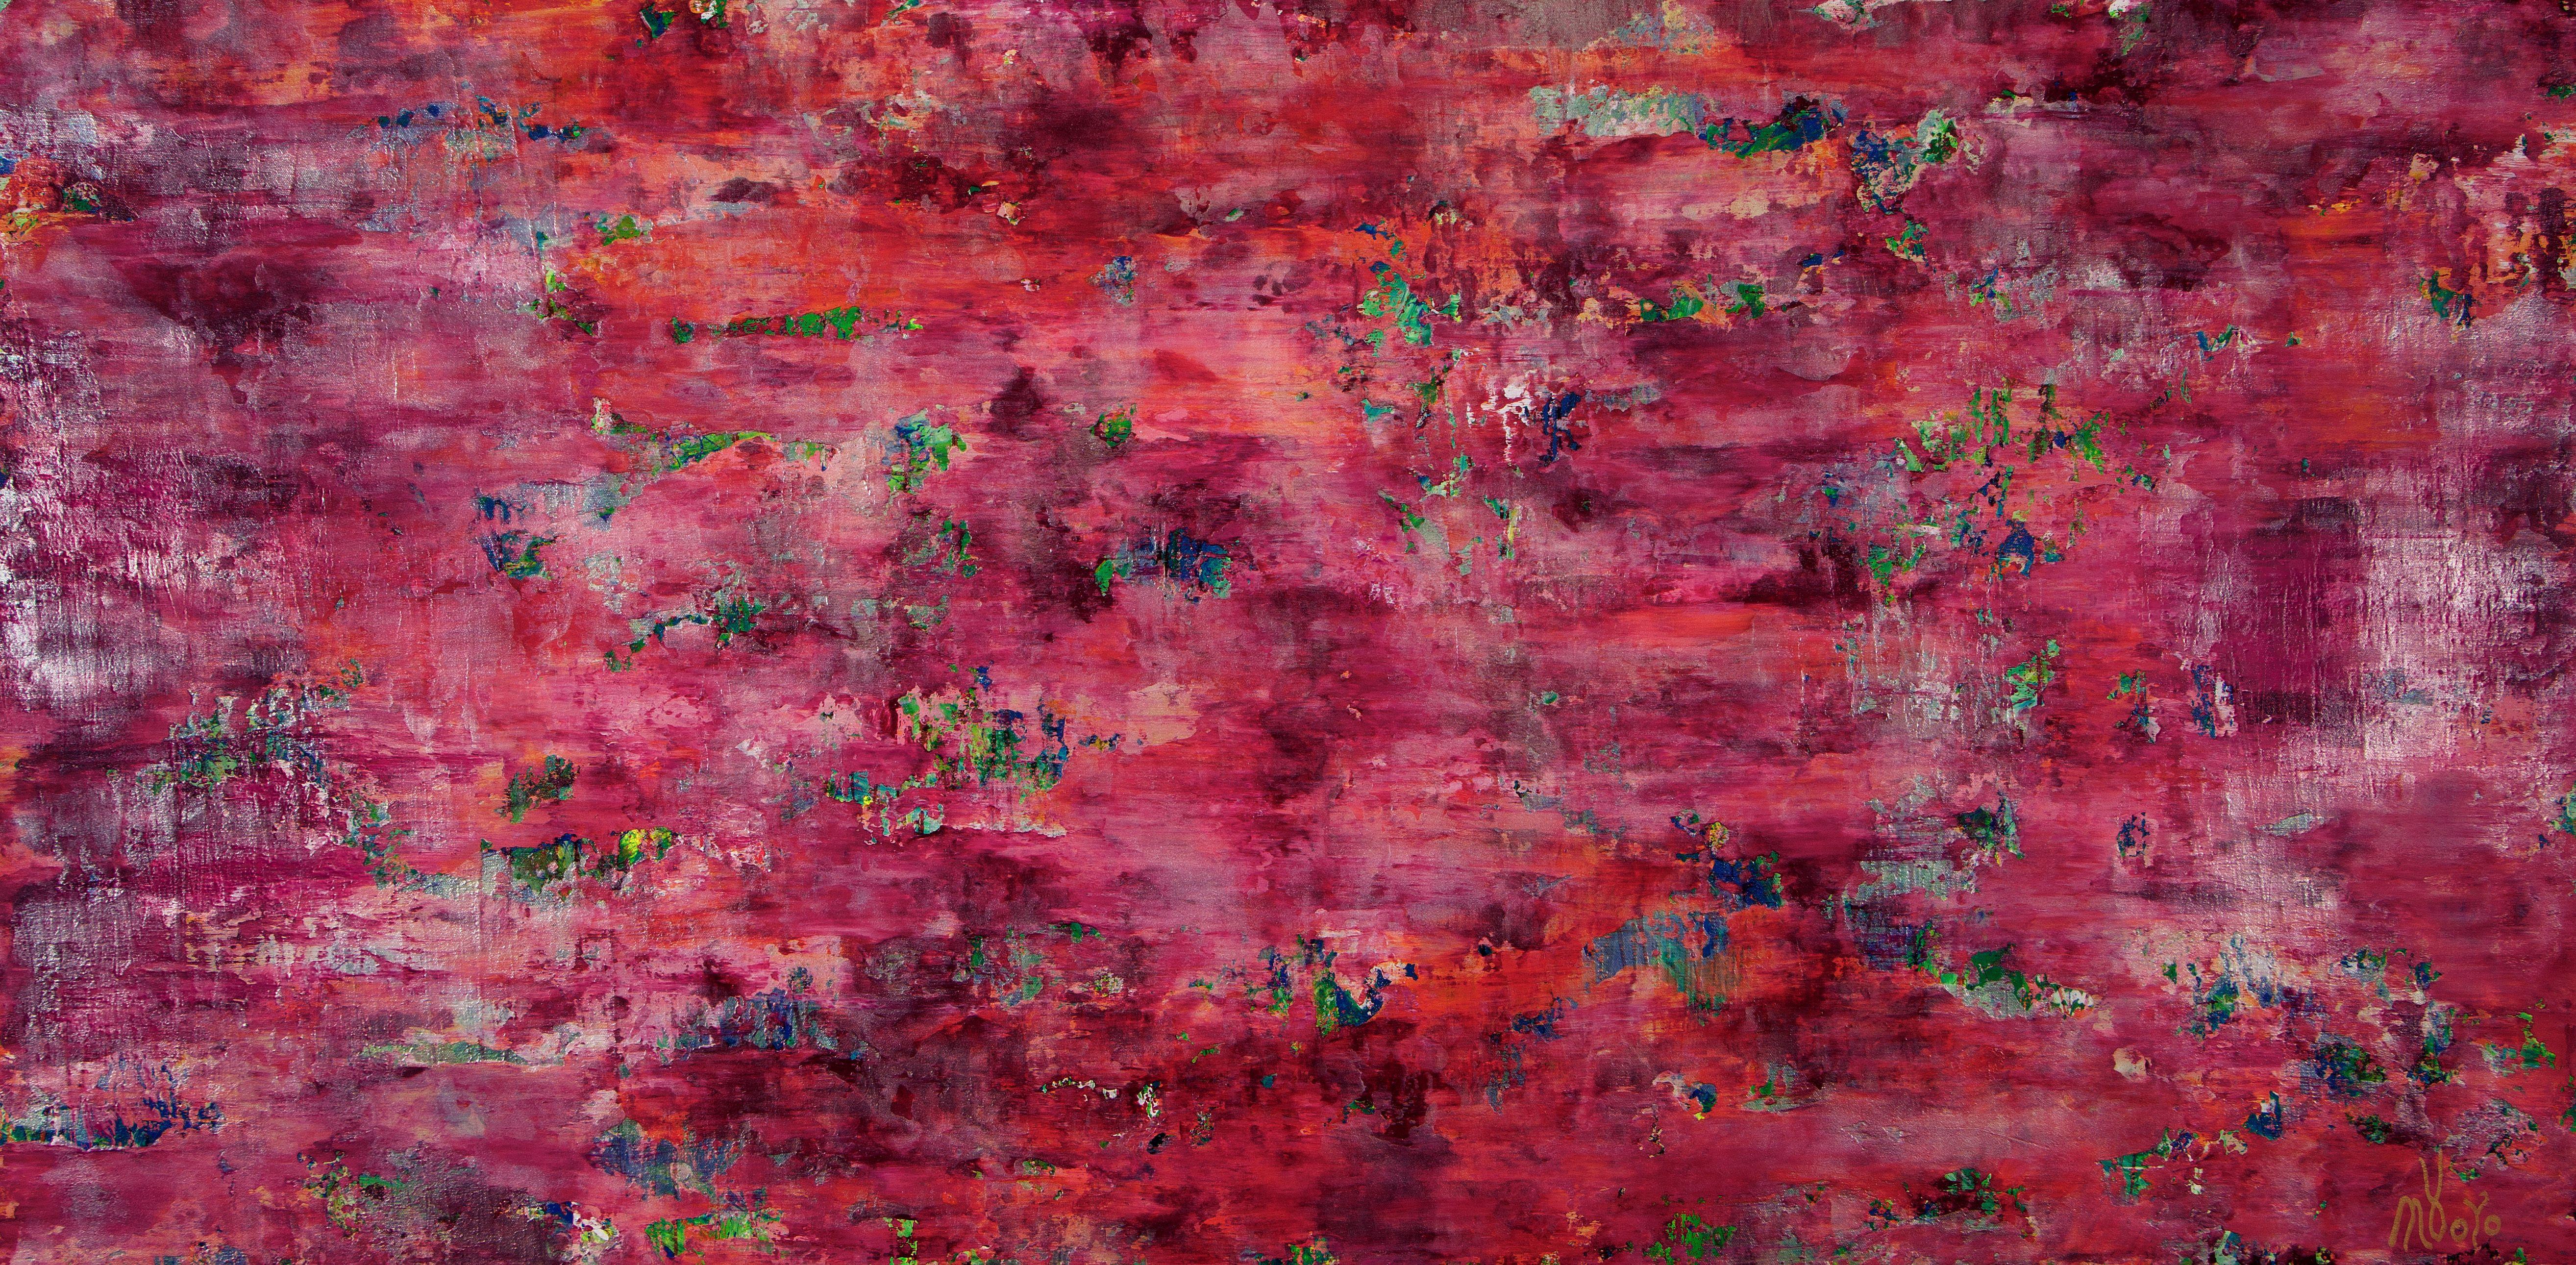 Bright pink window view, Mixed Media on Canvas - Mixed Media Art by Nestor Toro